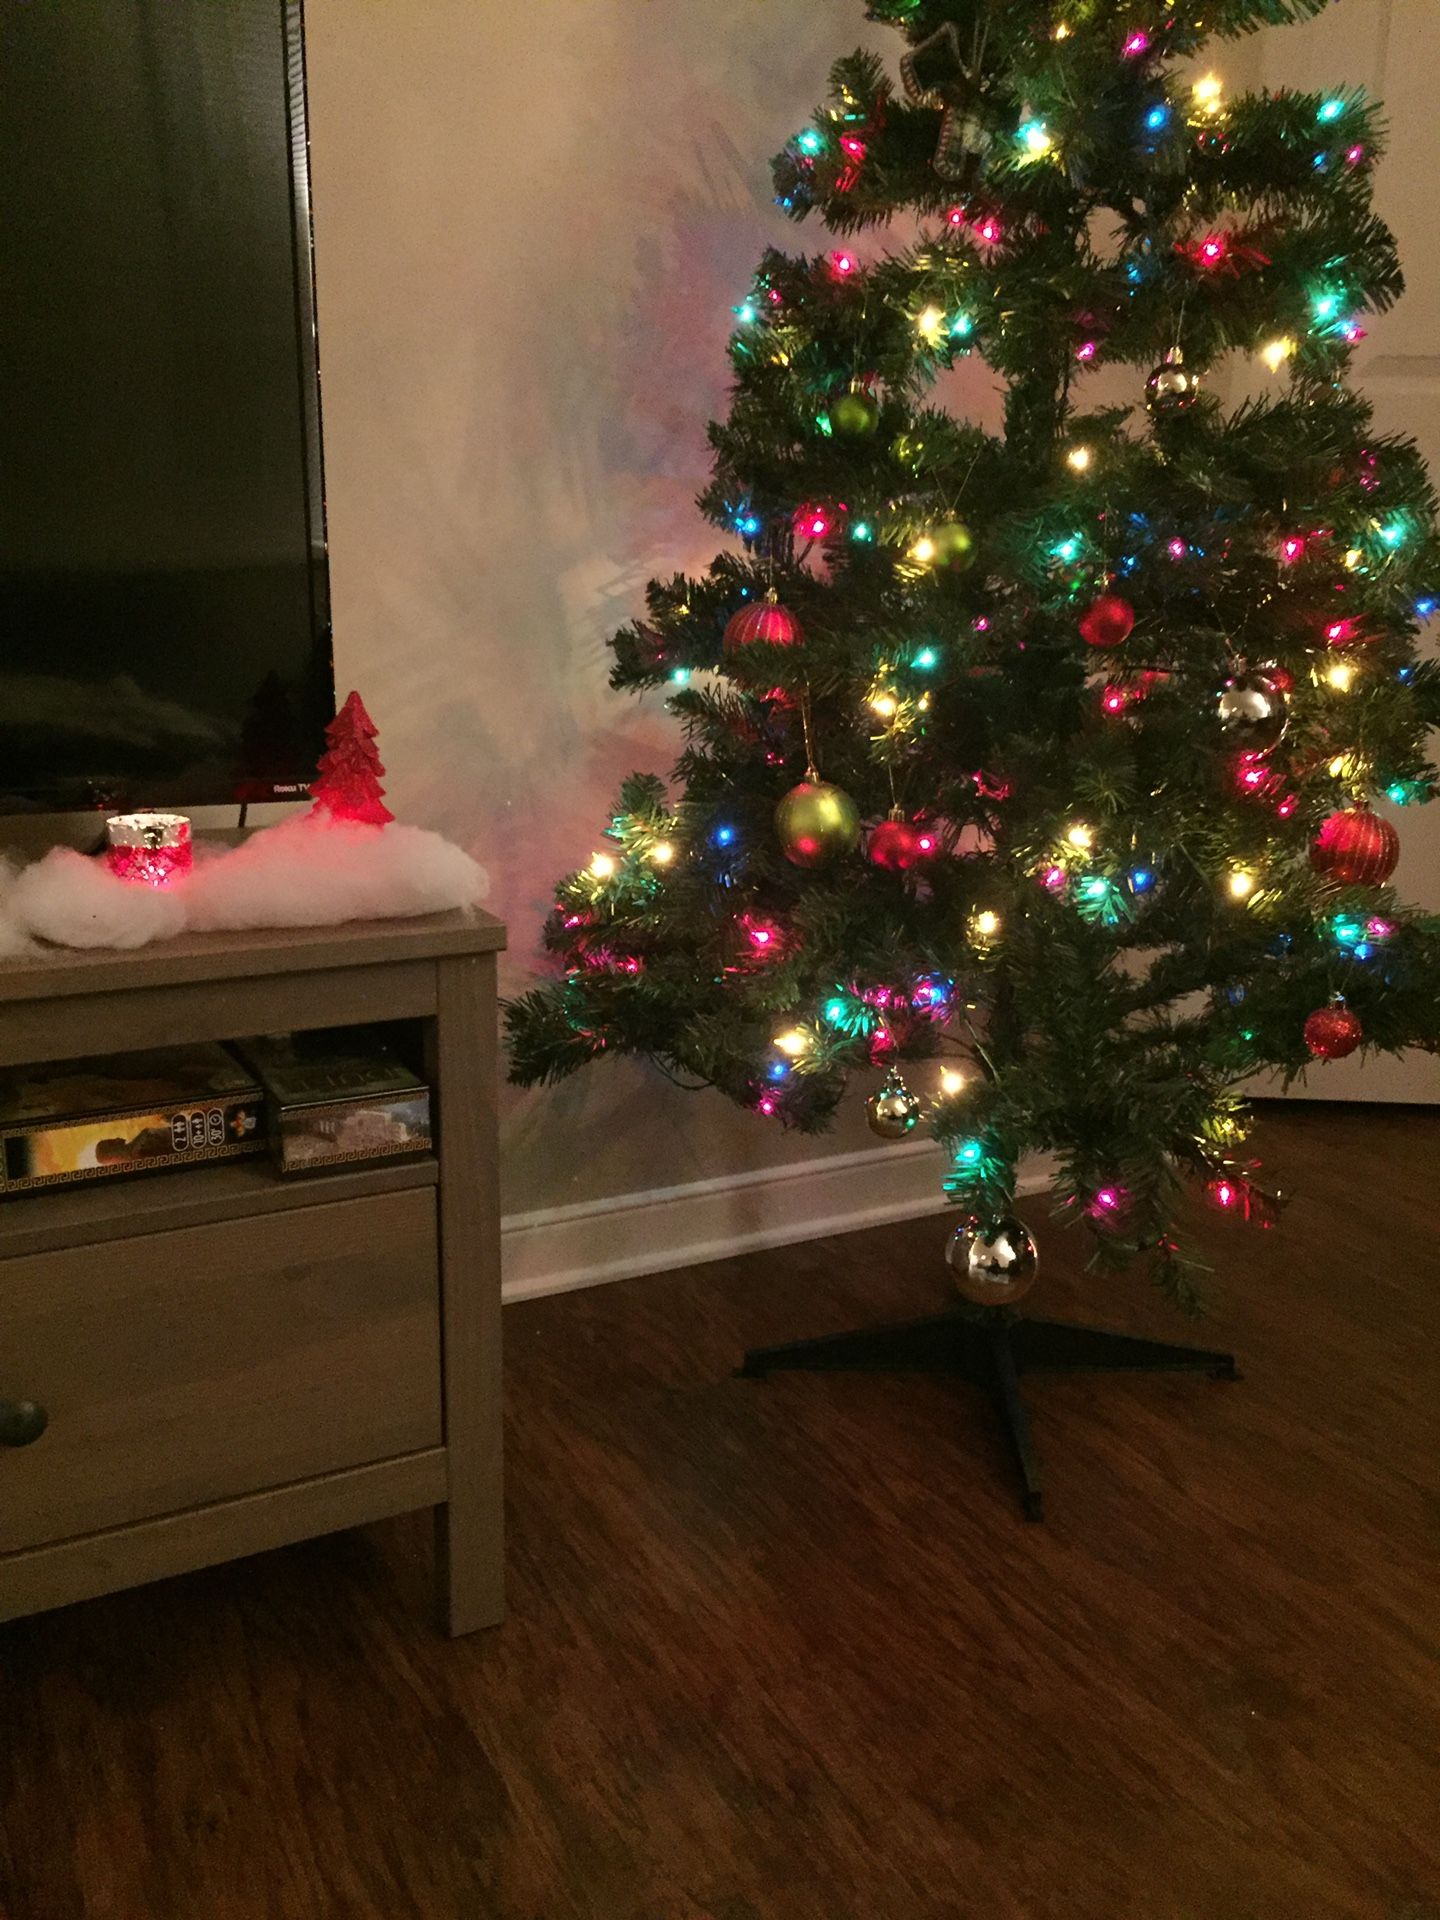 Christmas tree, wreath, ornaments, lights, and Christmas decor